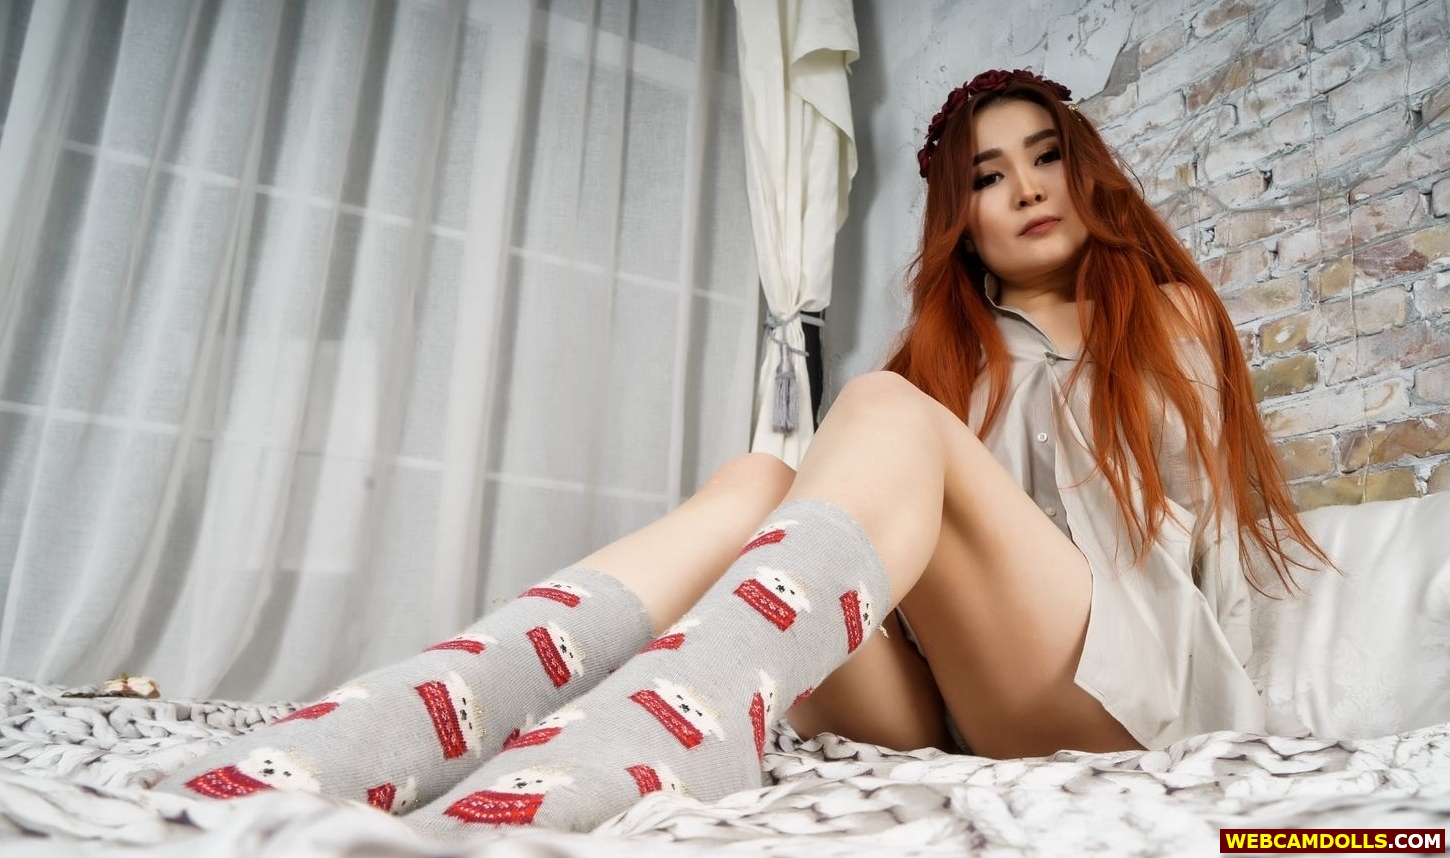 Redhead Asian Girl in Grey Shirt and Colored Socks on Webcamdolls